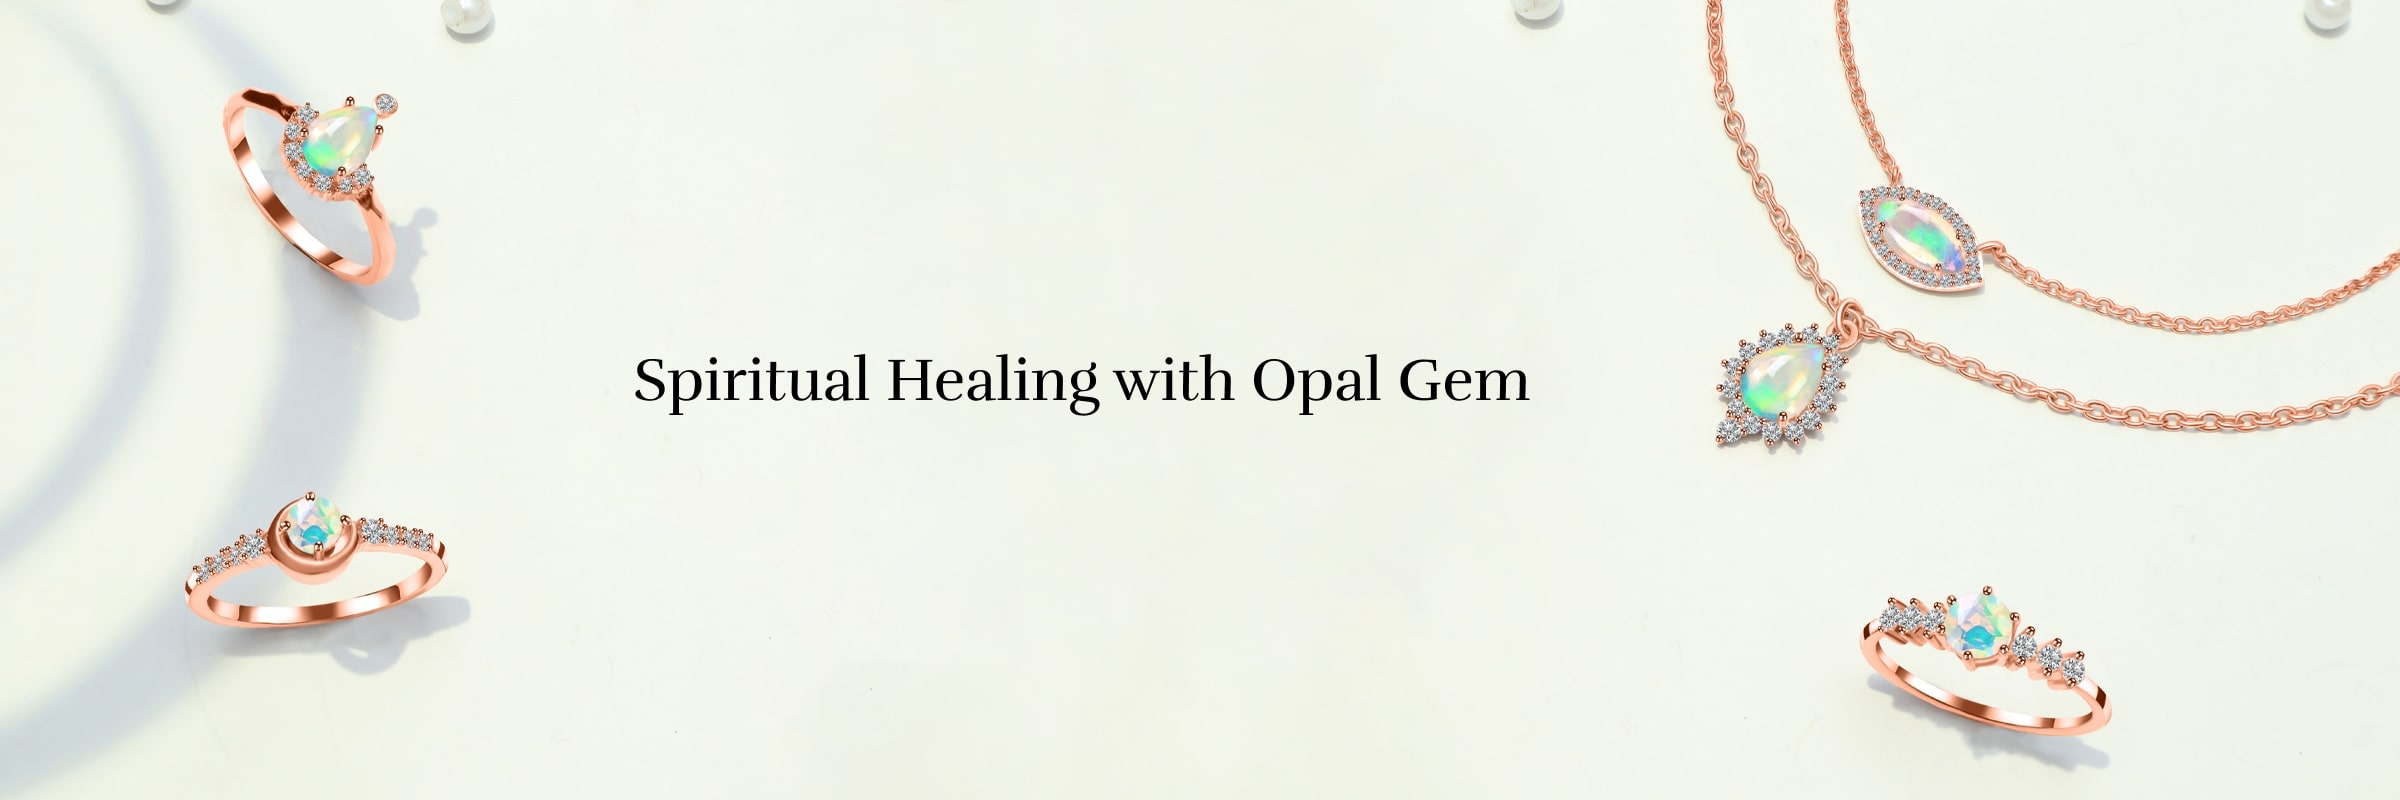 Spiritual benefits of opal